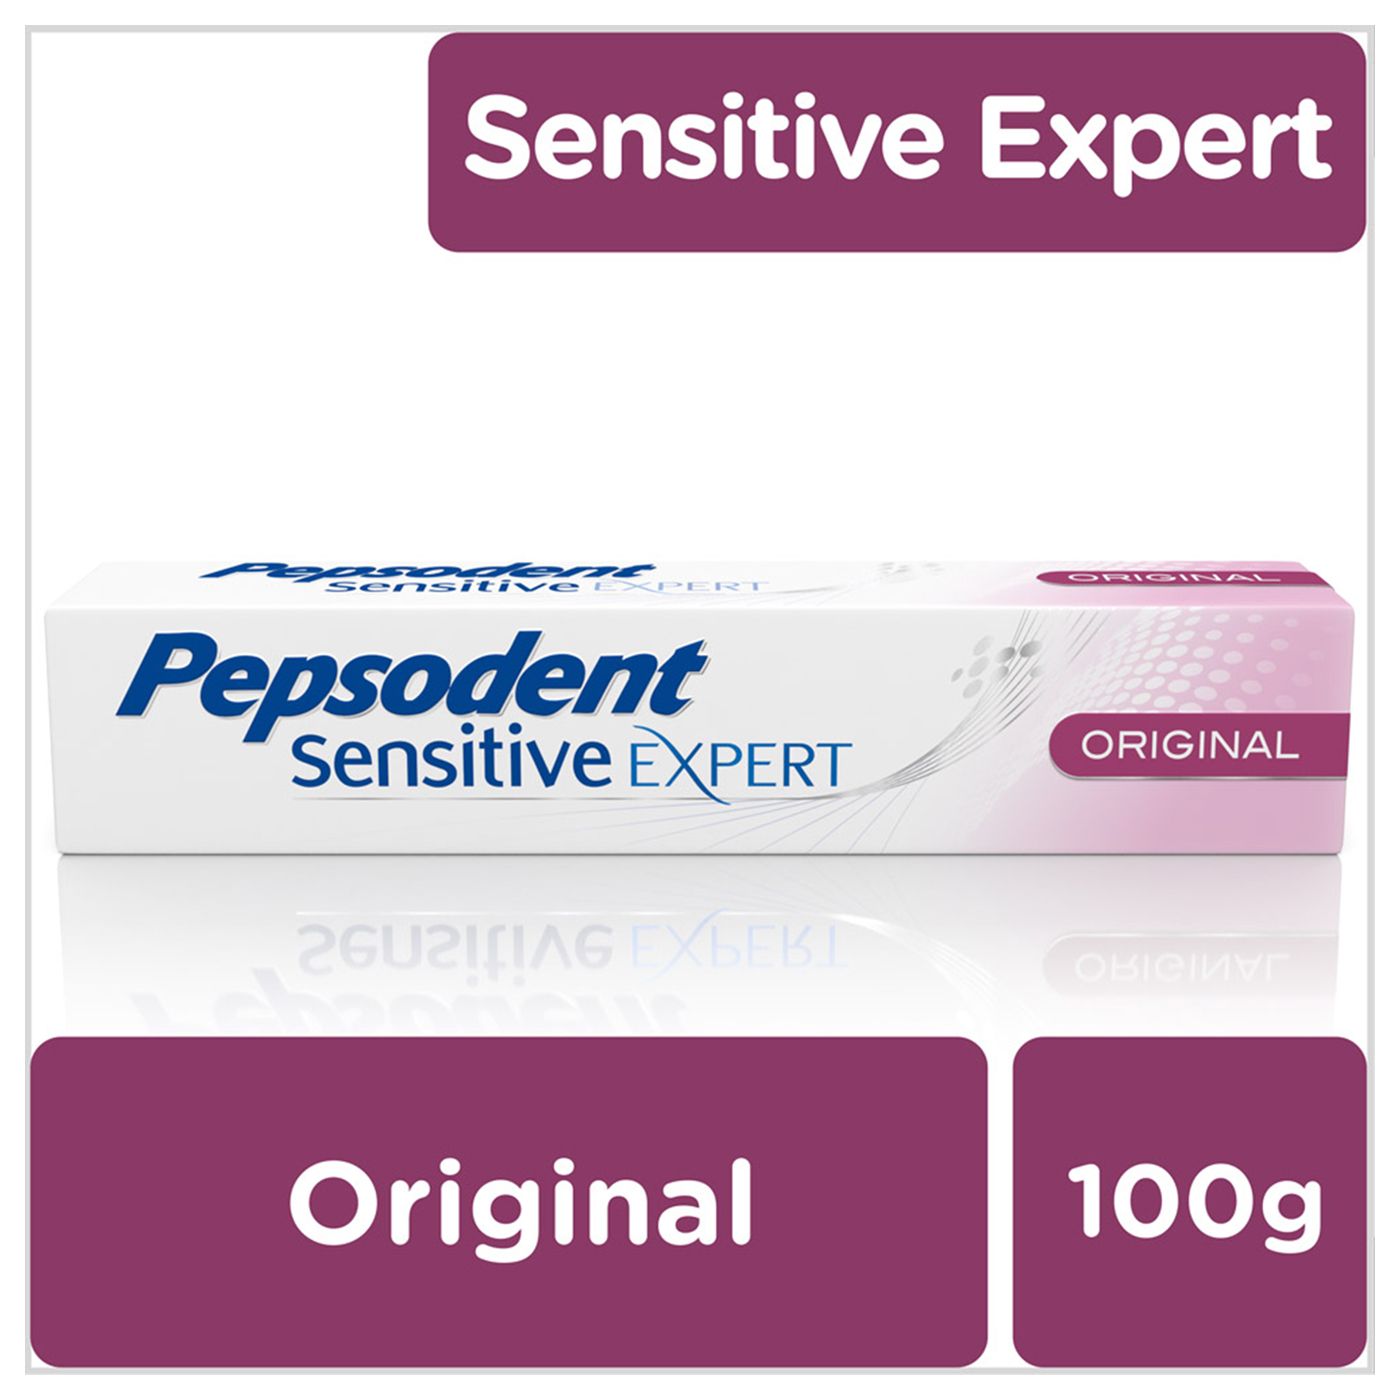 Pepsodent Sensitive Expert PAsta gigi Original 100g - 1